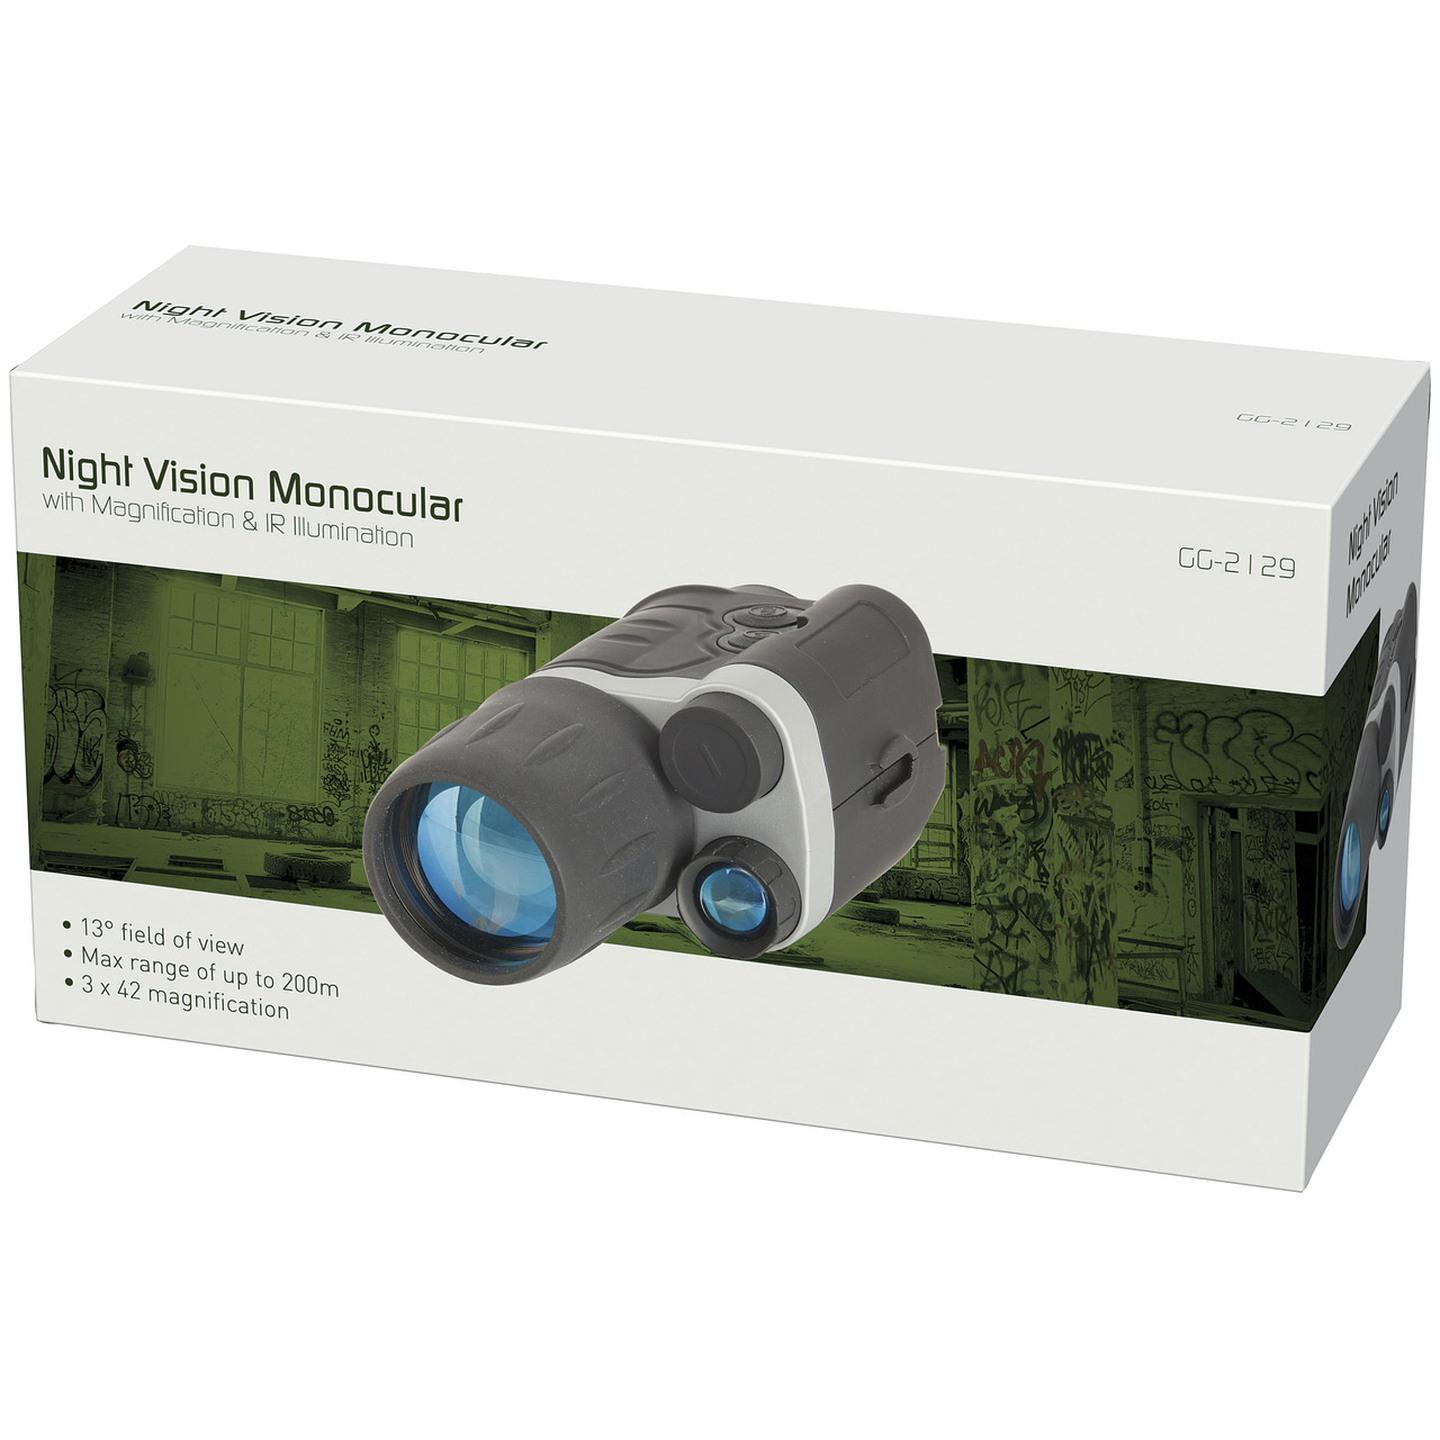 Night Vision Monocular with 3 x Magnification & IR Illumination